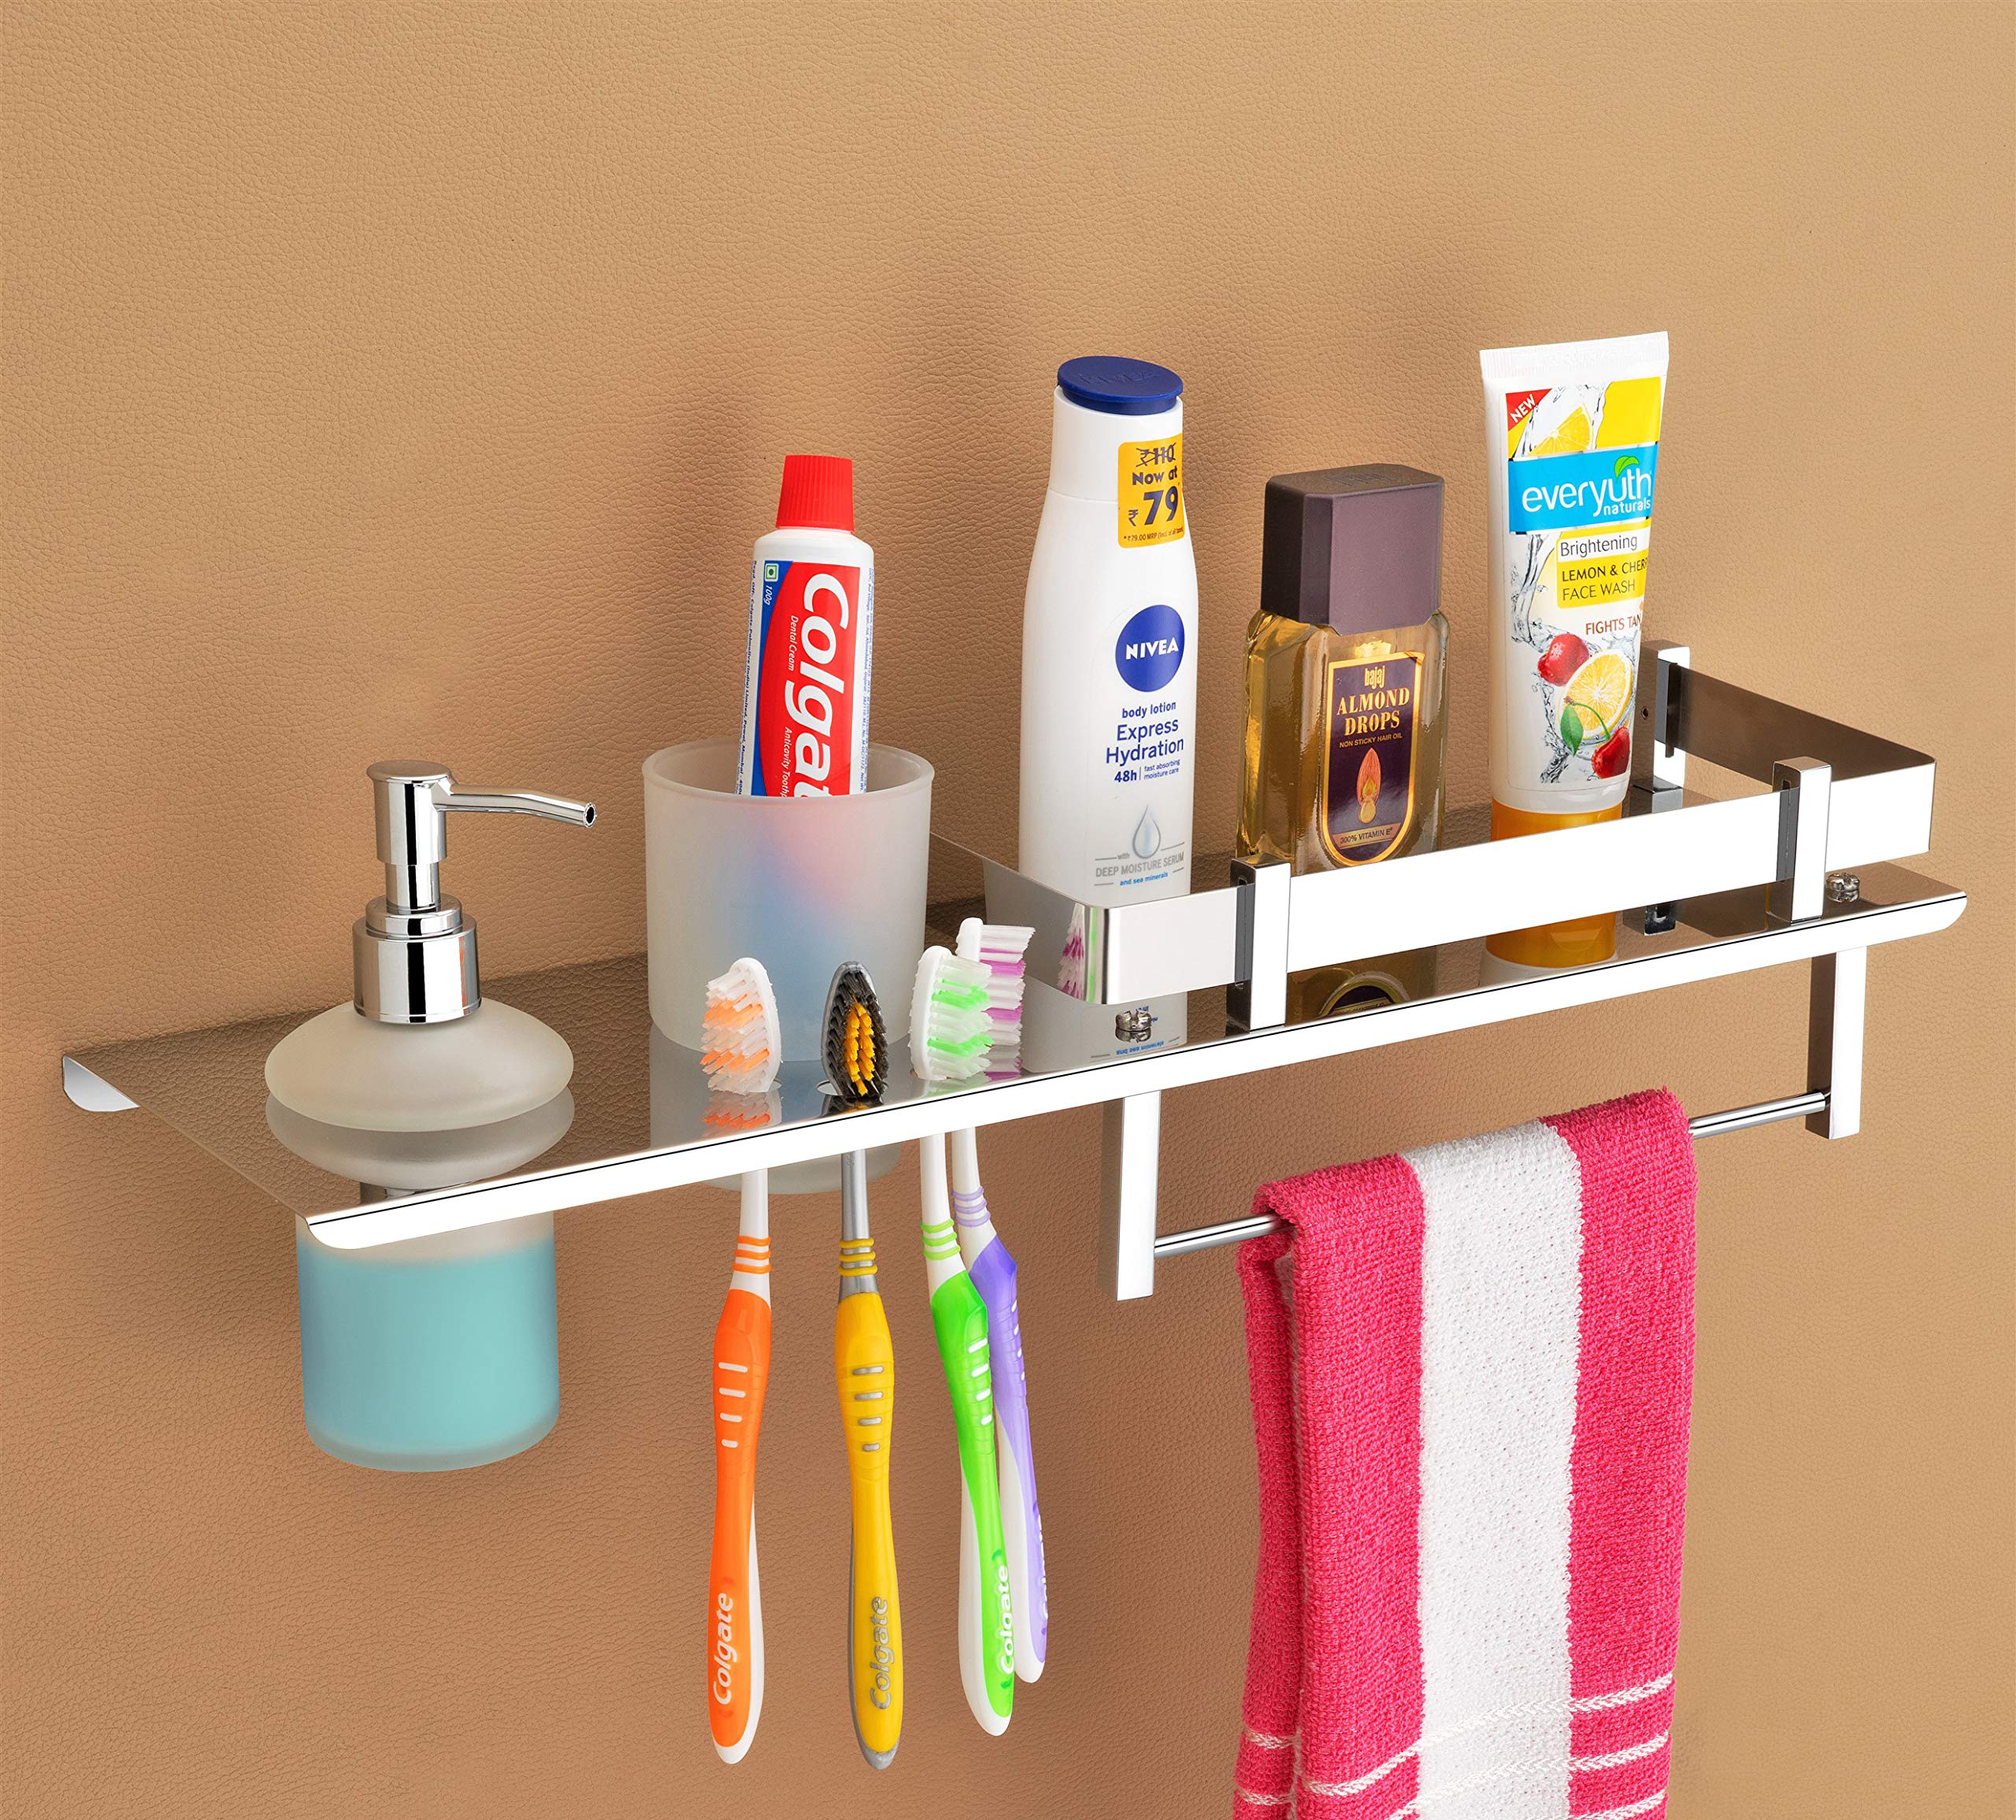 Plantex GI Steel Self-Adhesive Multipurpose Bathroom Shelf with